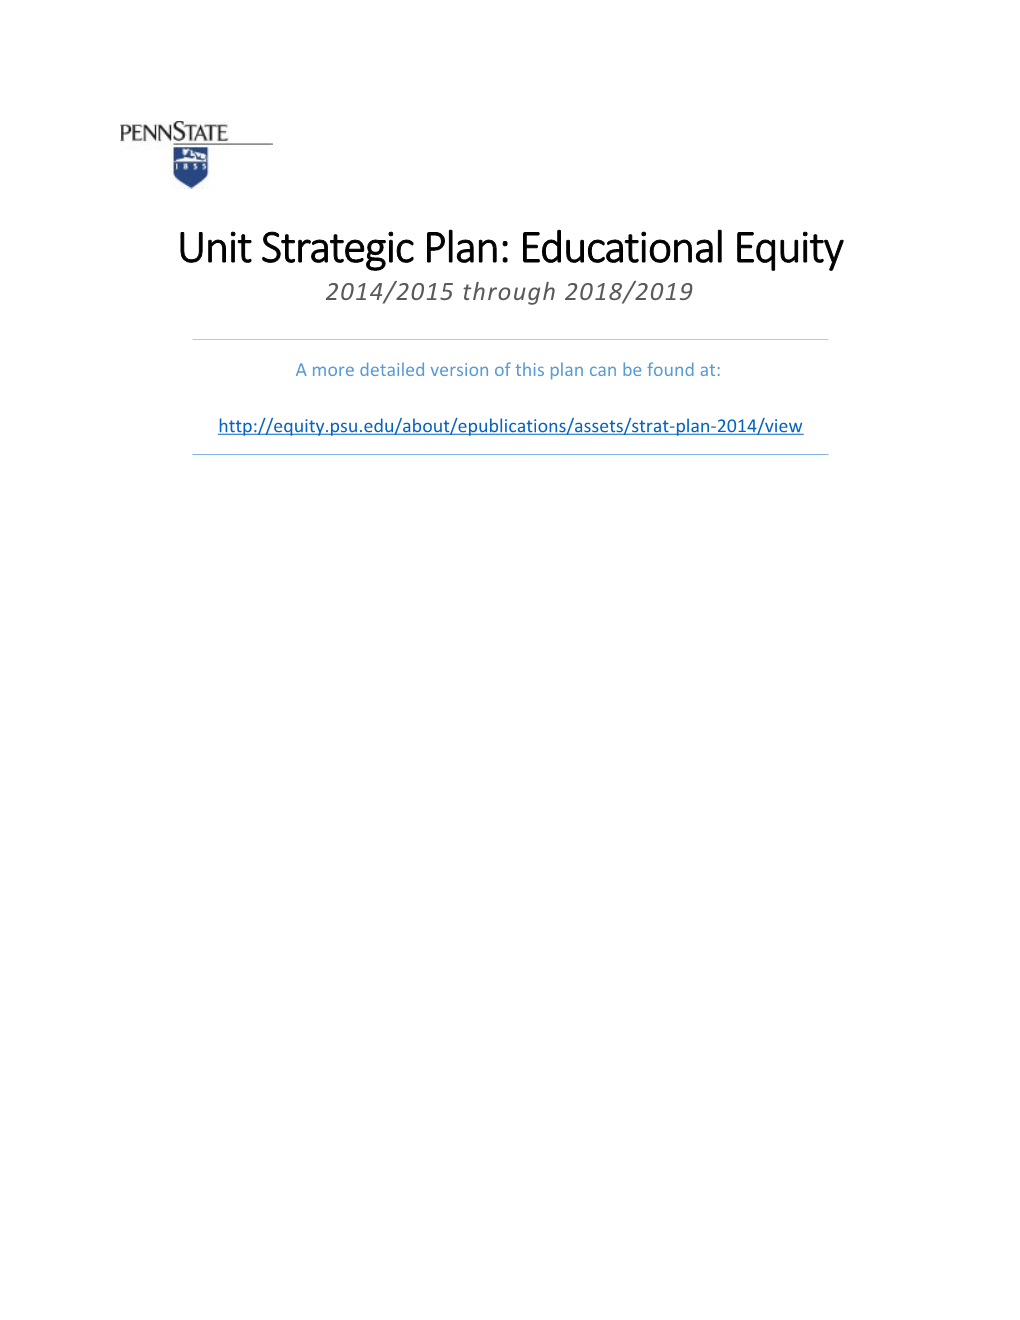 Penn State Educational Equity Strategic Plan